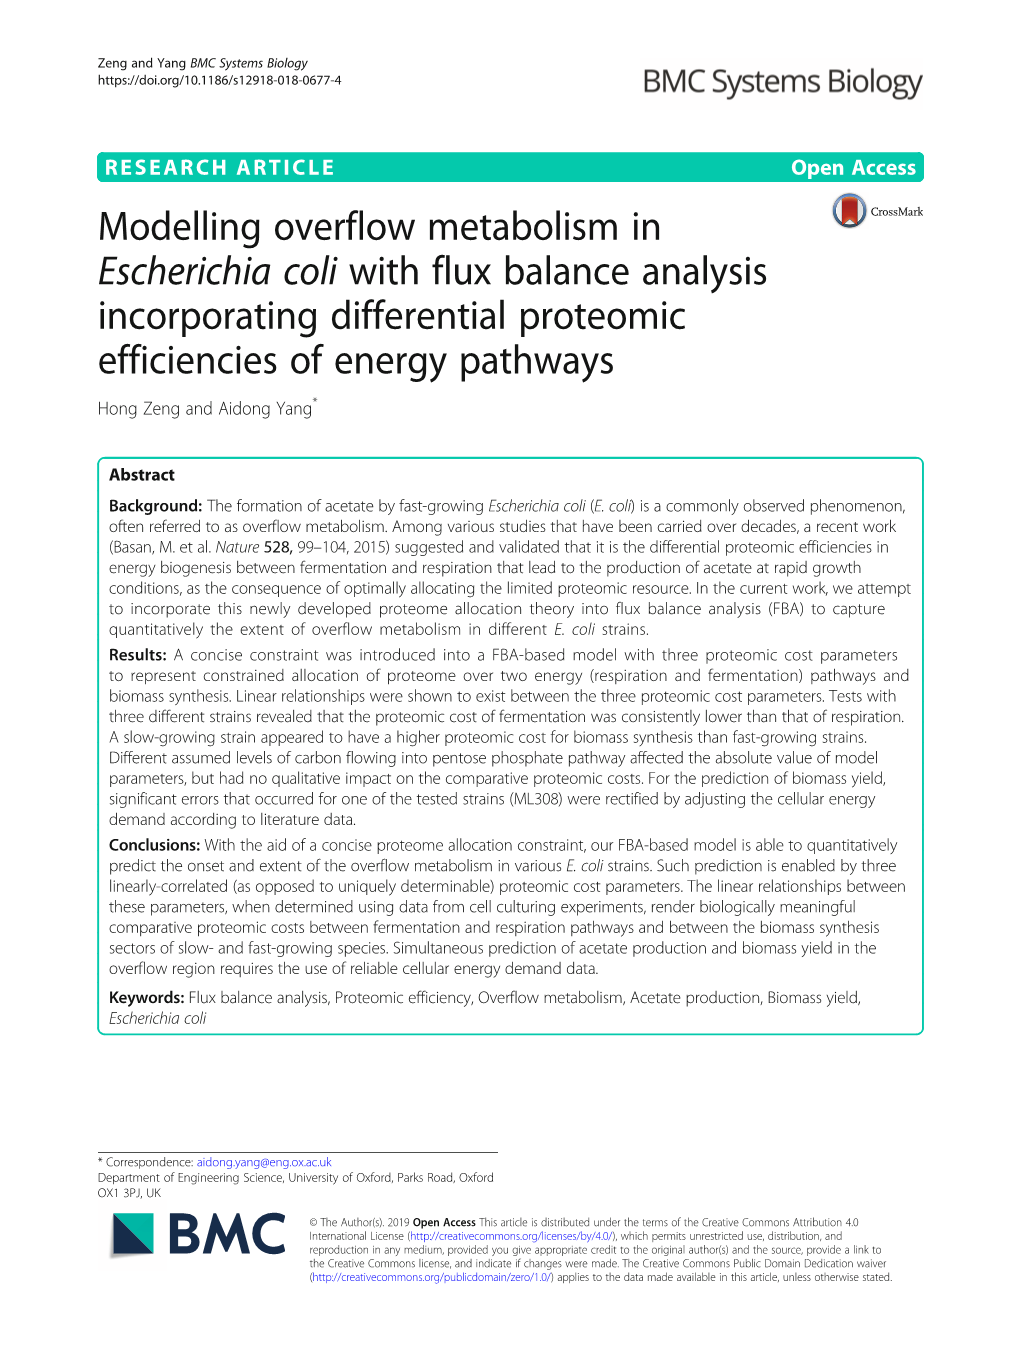 Modelling Overflow Metabolism in Escherichia Coli with Flux Balance